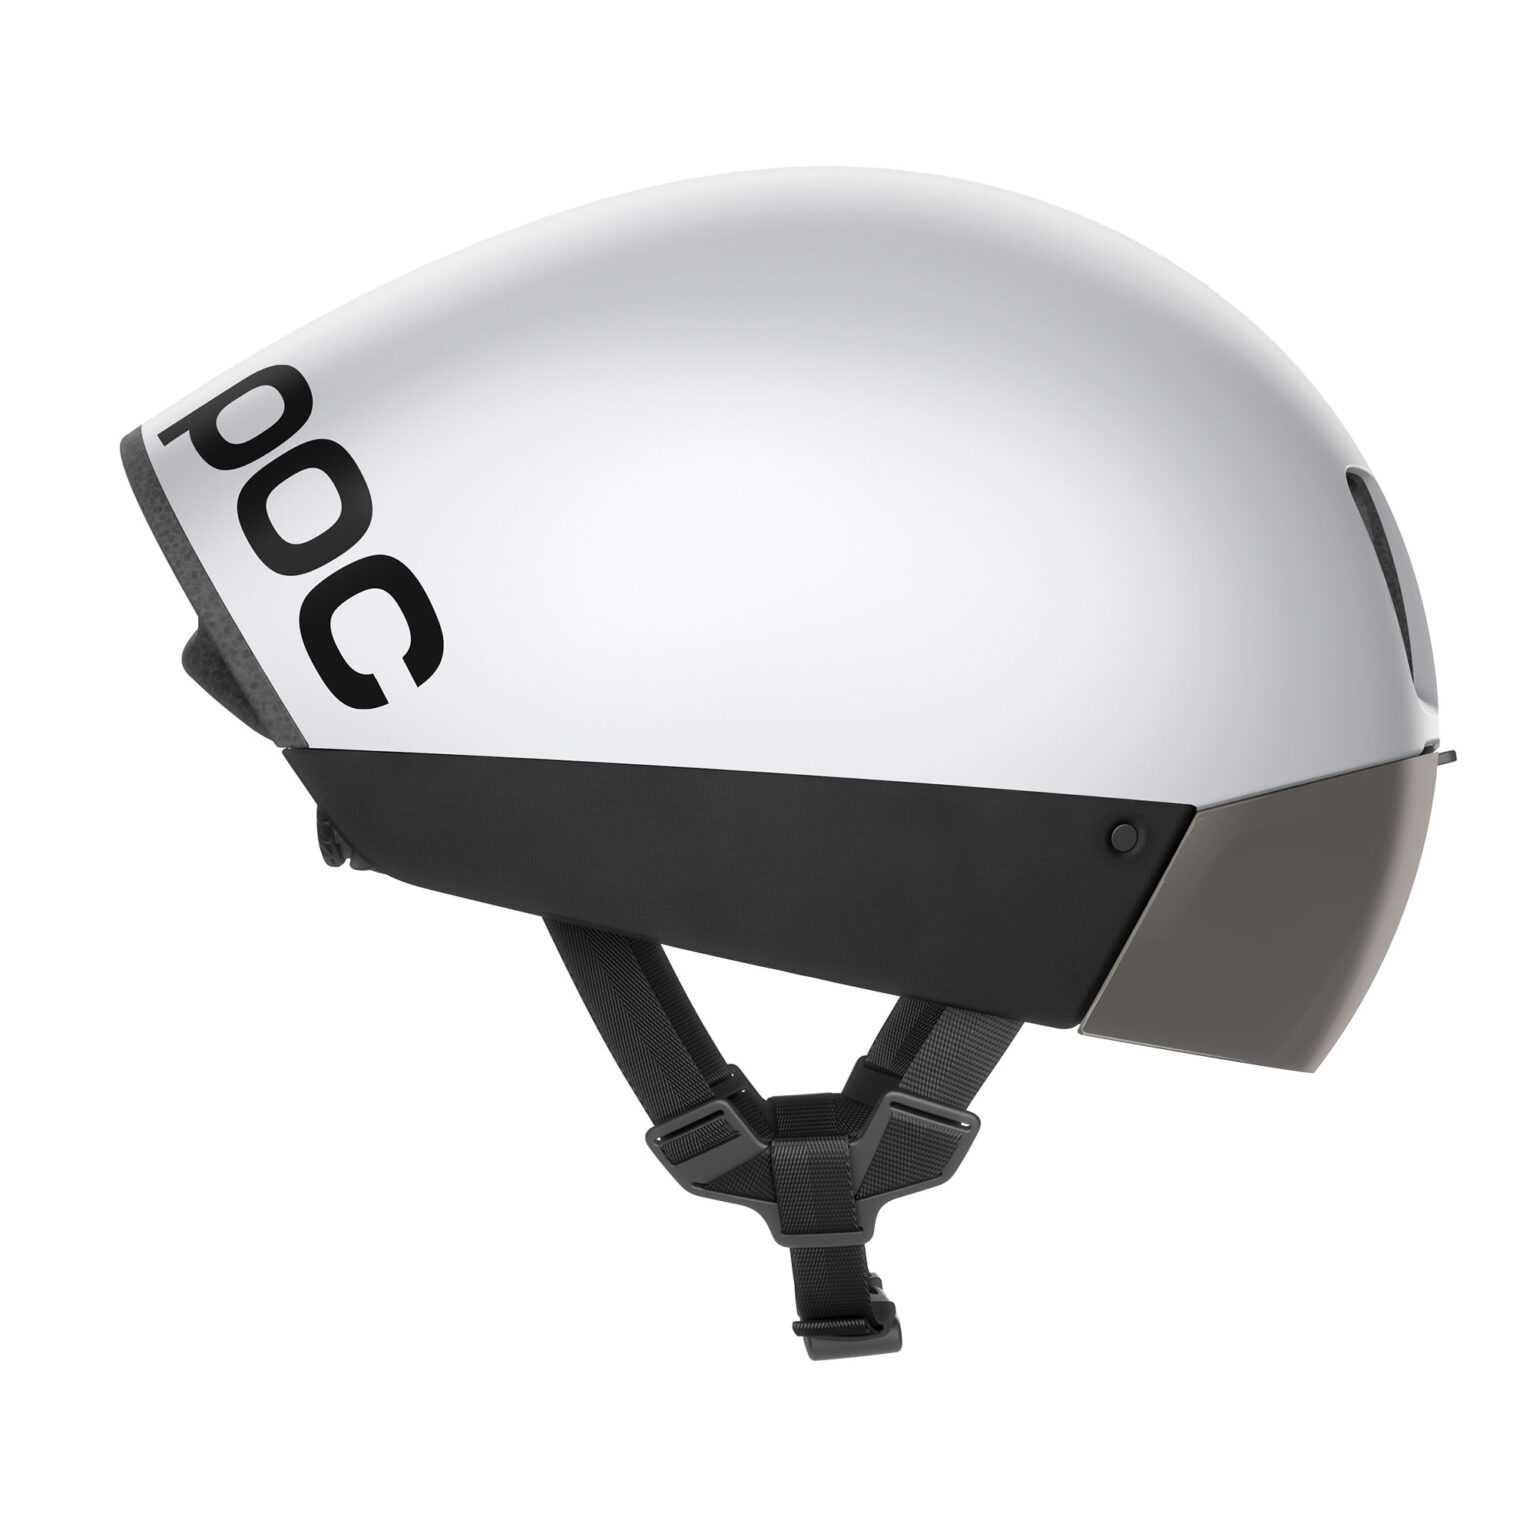 POC Procen Air aero road race helmet in Hydrogen White